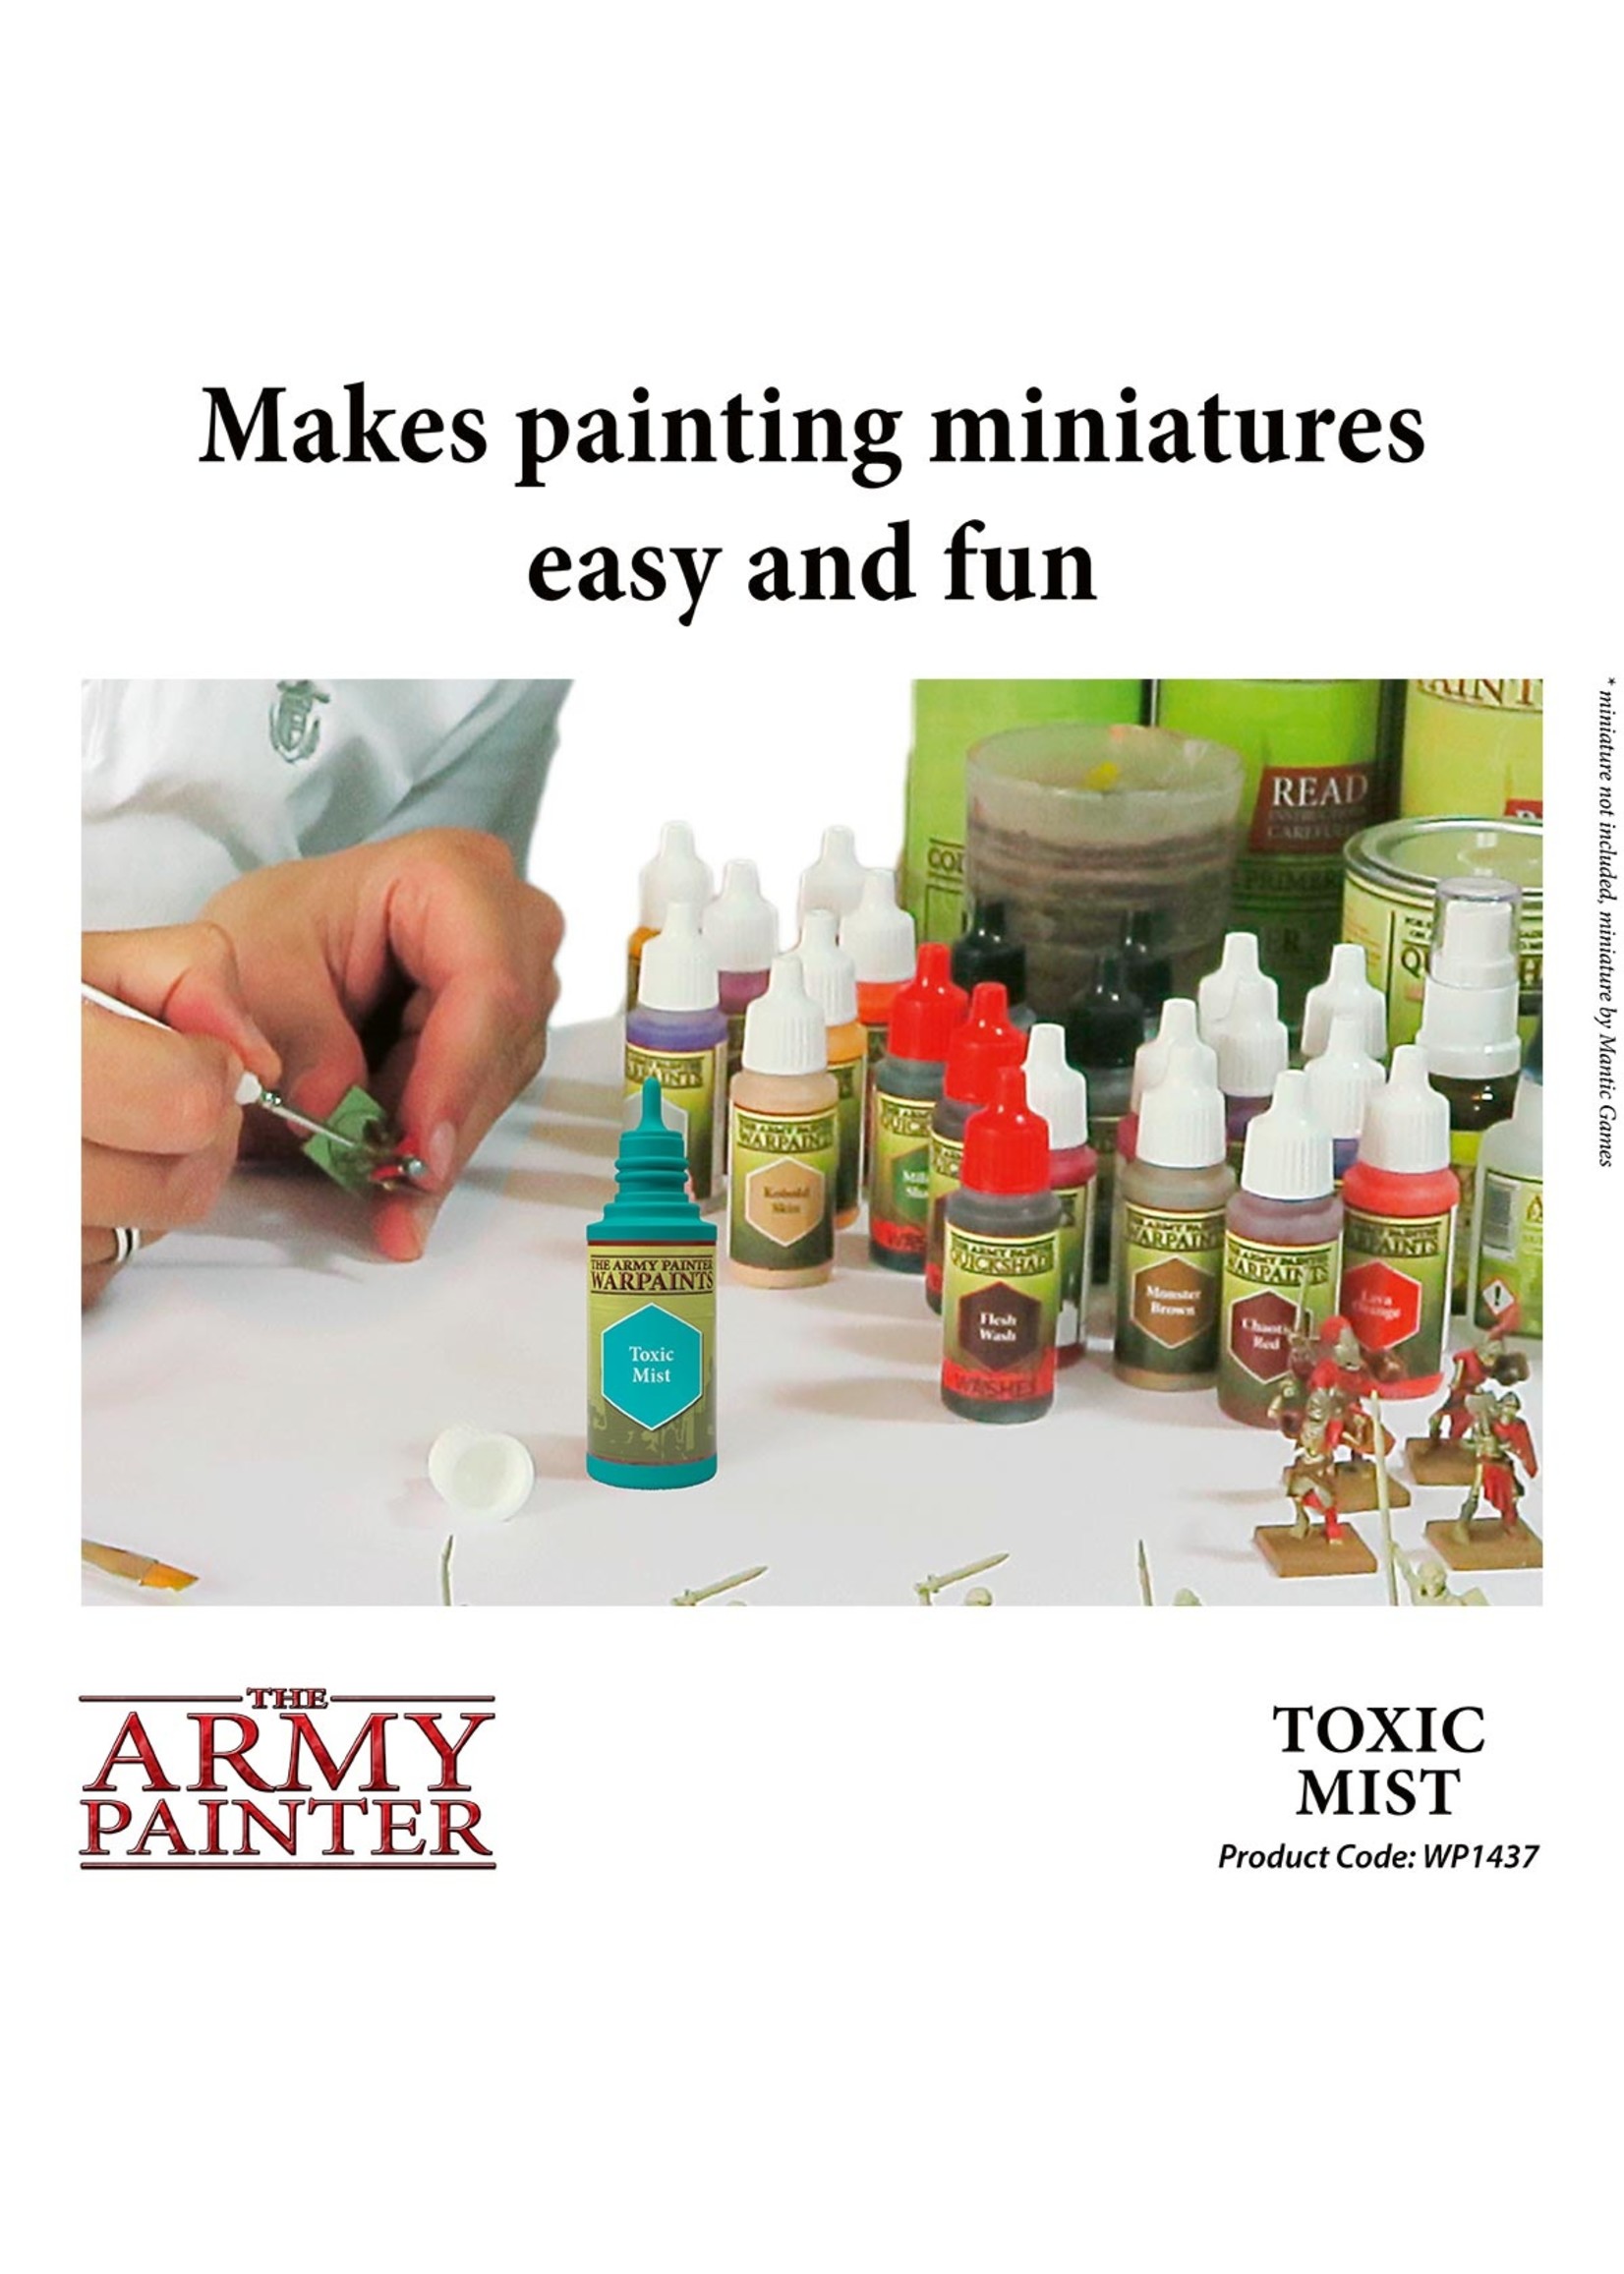 The Army Painter WP1437 - Toxic Mist 18ml Acrylic Paint